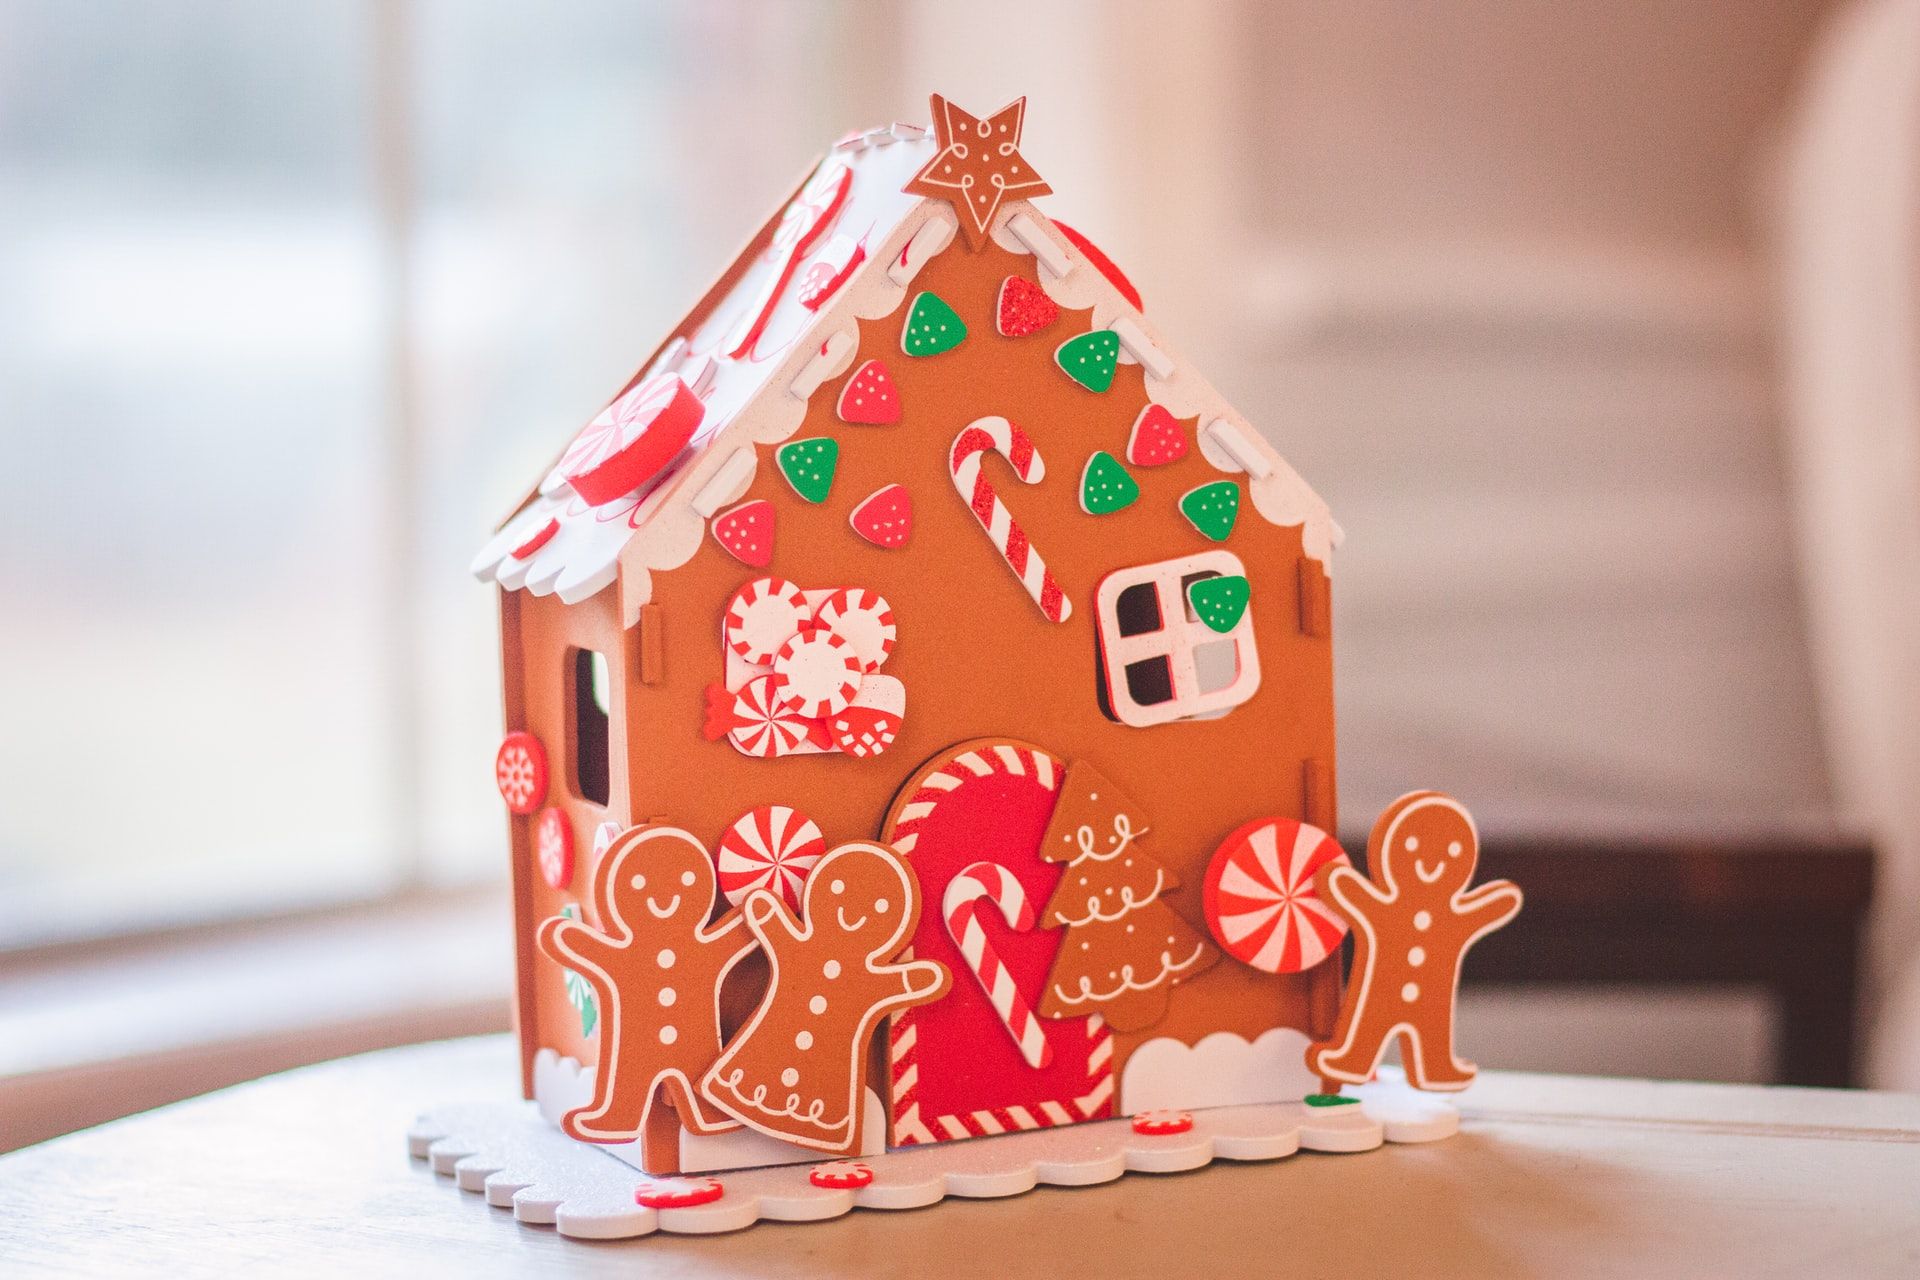 Christmas Eve menu for companies - gingerbread house